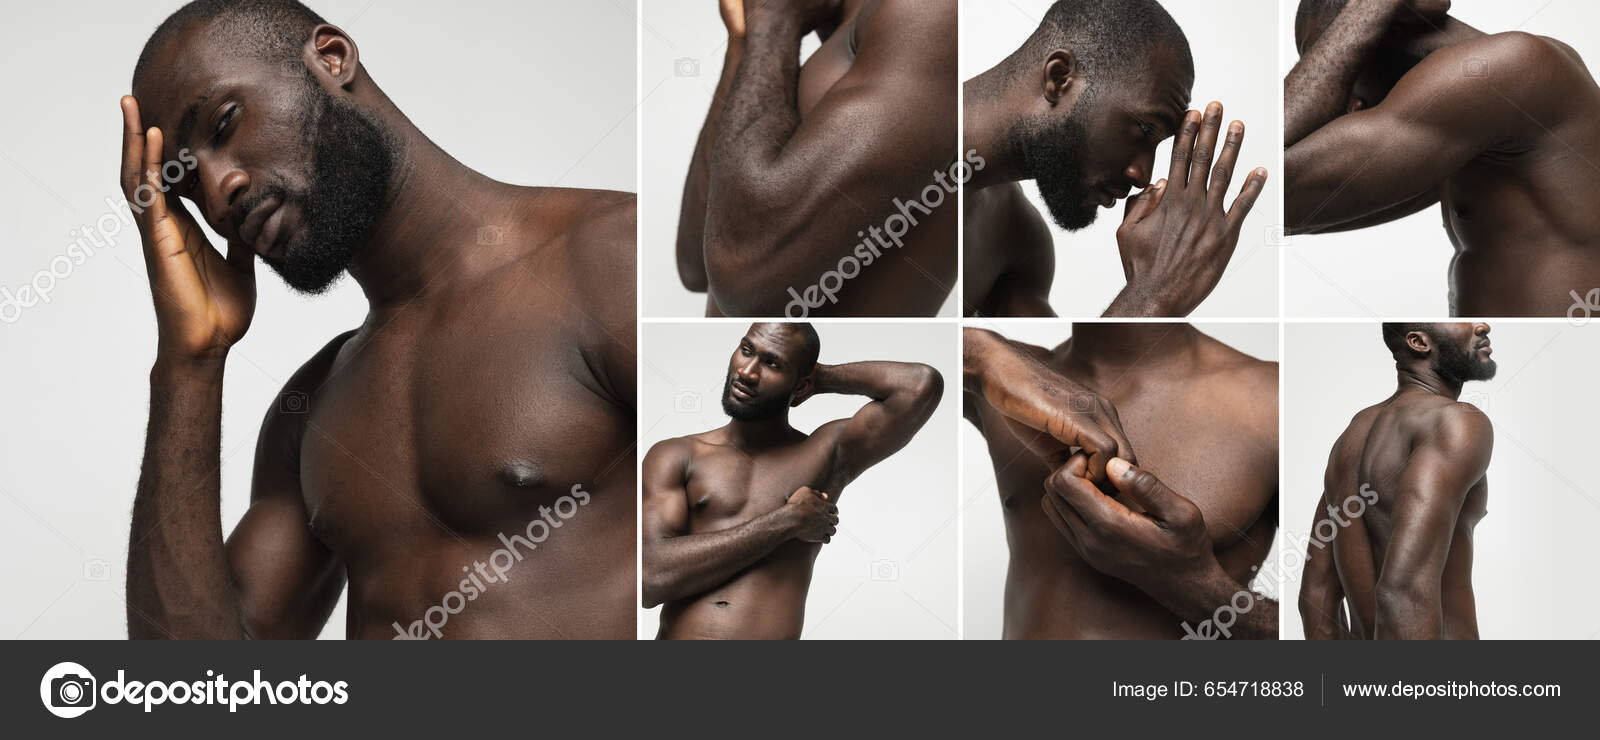 Luke Hicks by Nicole Jopek for MALE MODEL SCENE | Male models poses,  Photography poses for men, Fashion model poses